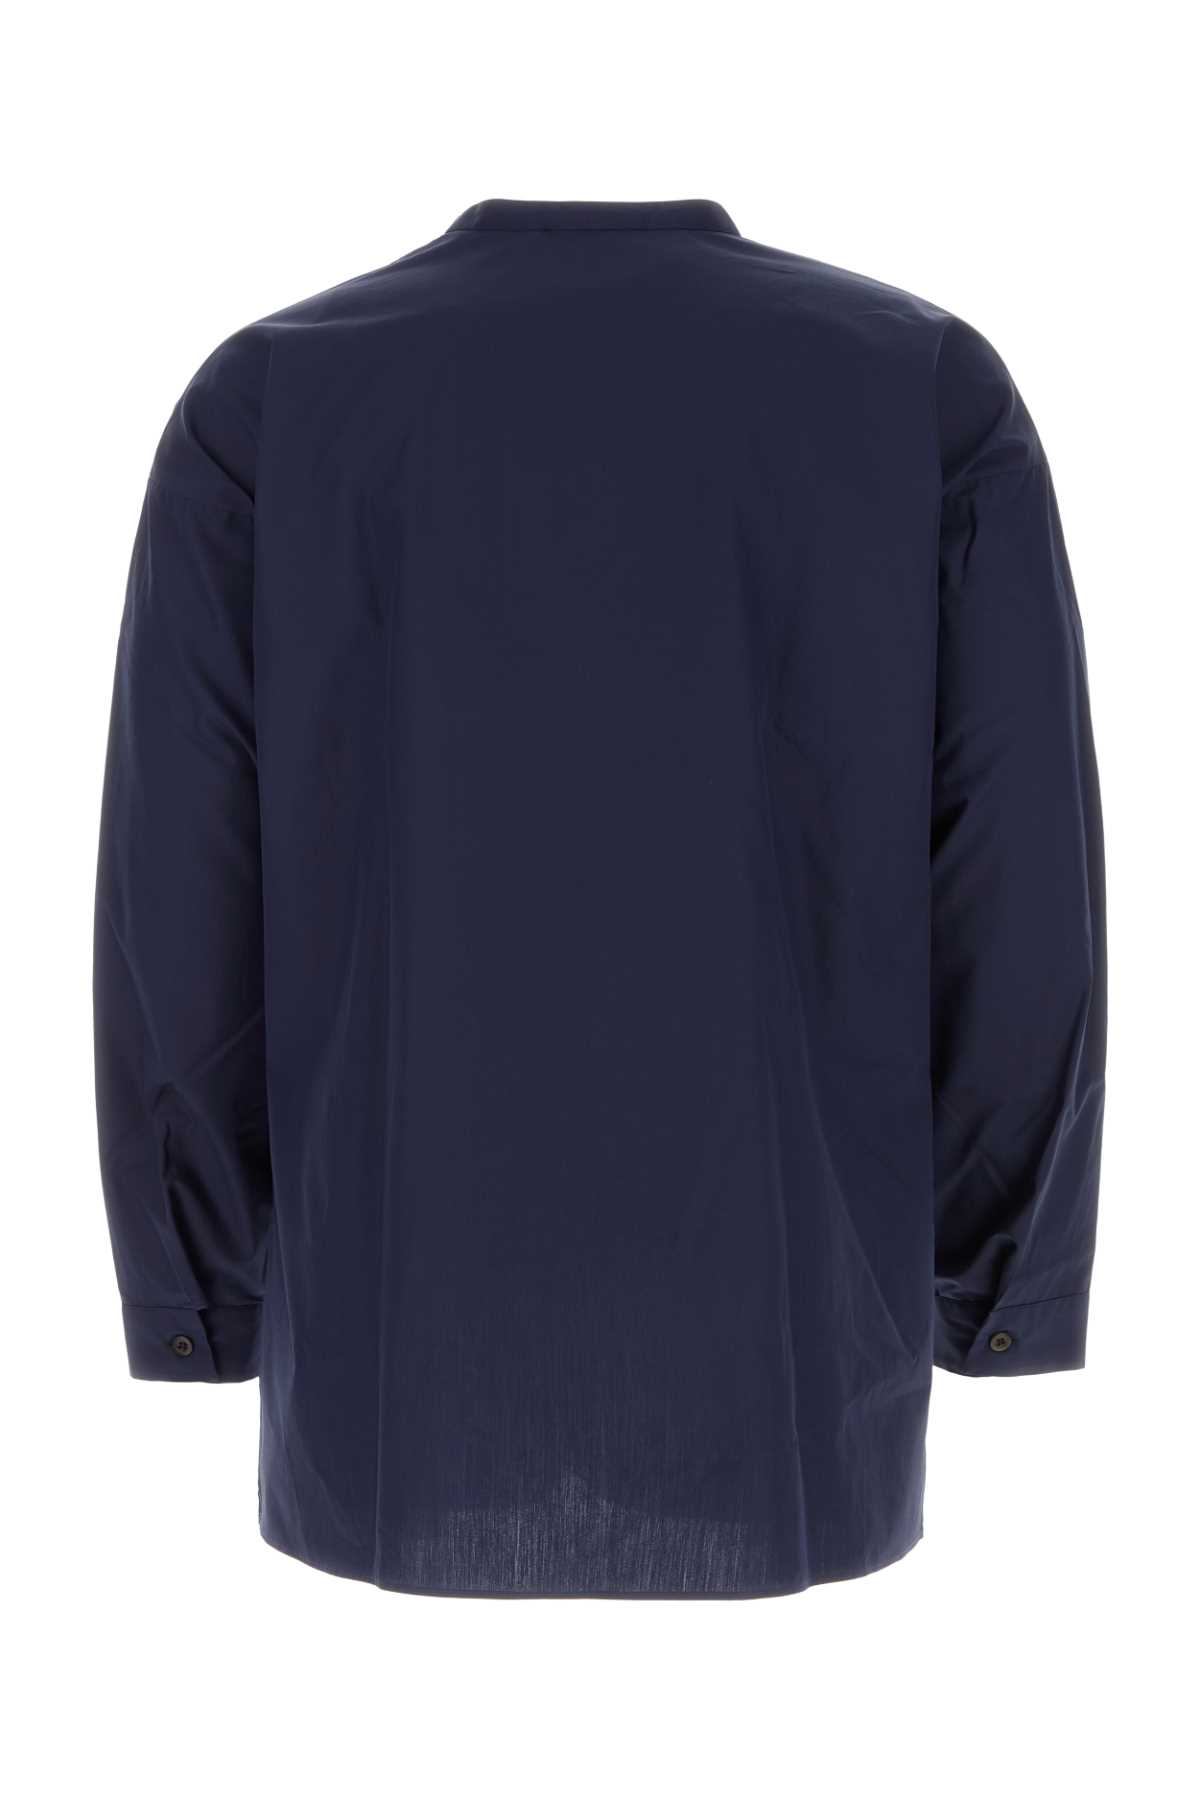 Prada Navy Blue Poplin Oversize Shirt In F0008